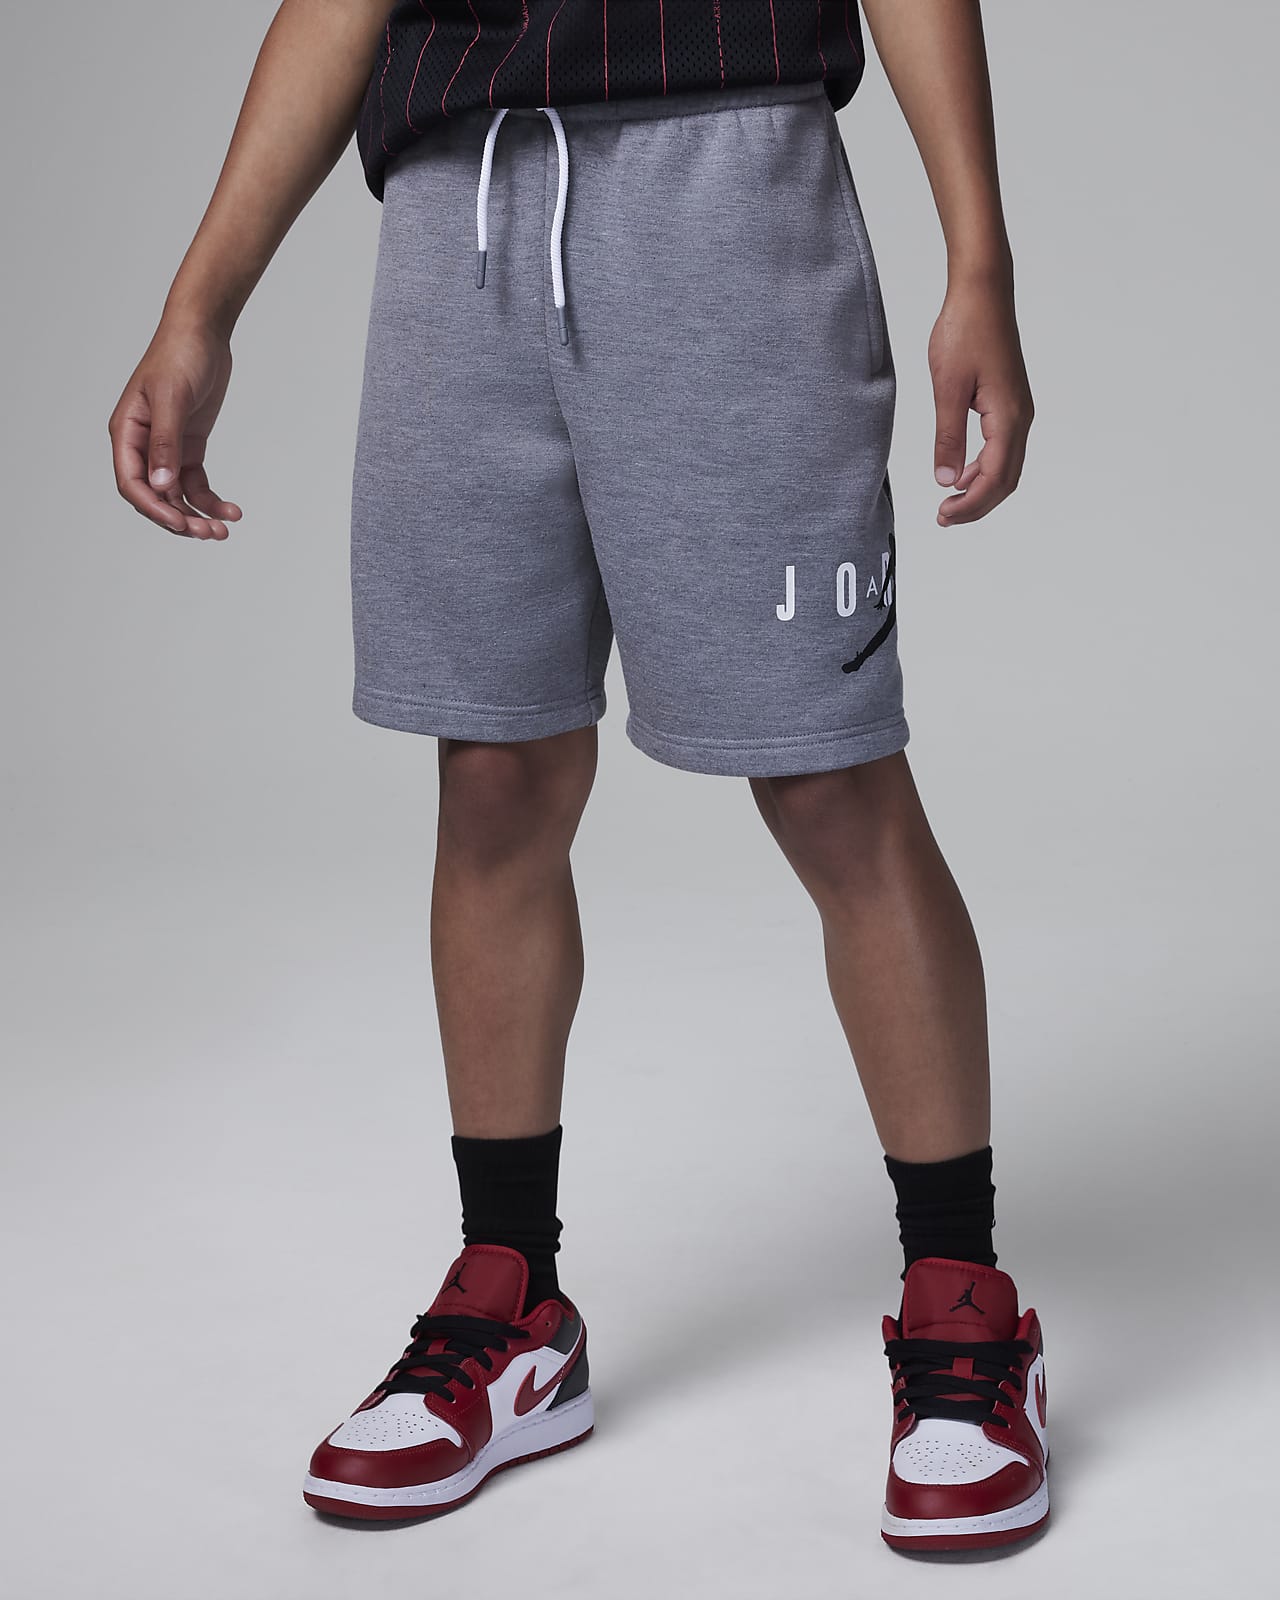 Jordan Pantalons curts de teixit Fleece - Nen/a